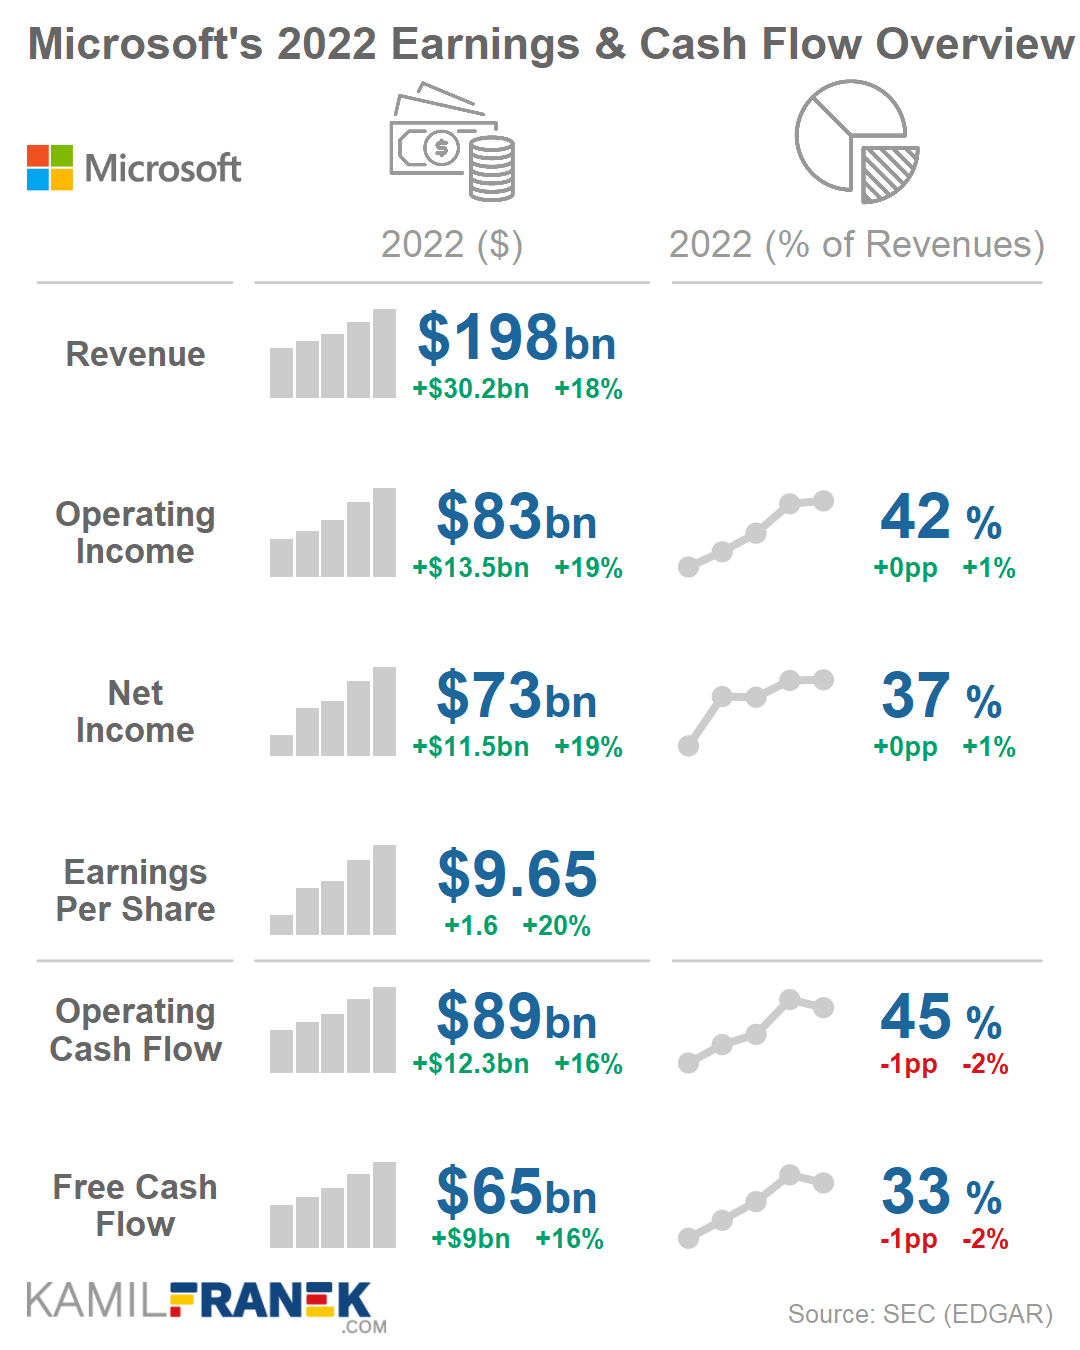 Microsoft's key income statement and cash flow metrics summary 2021